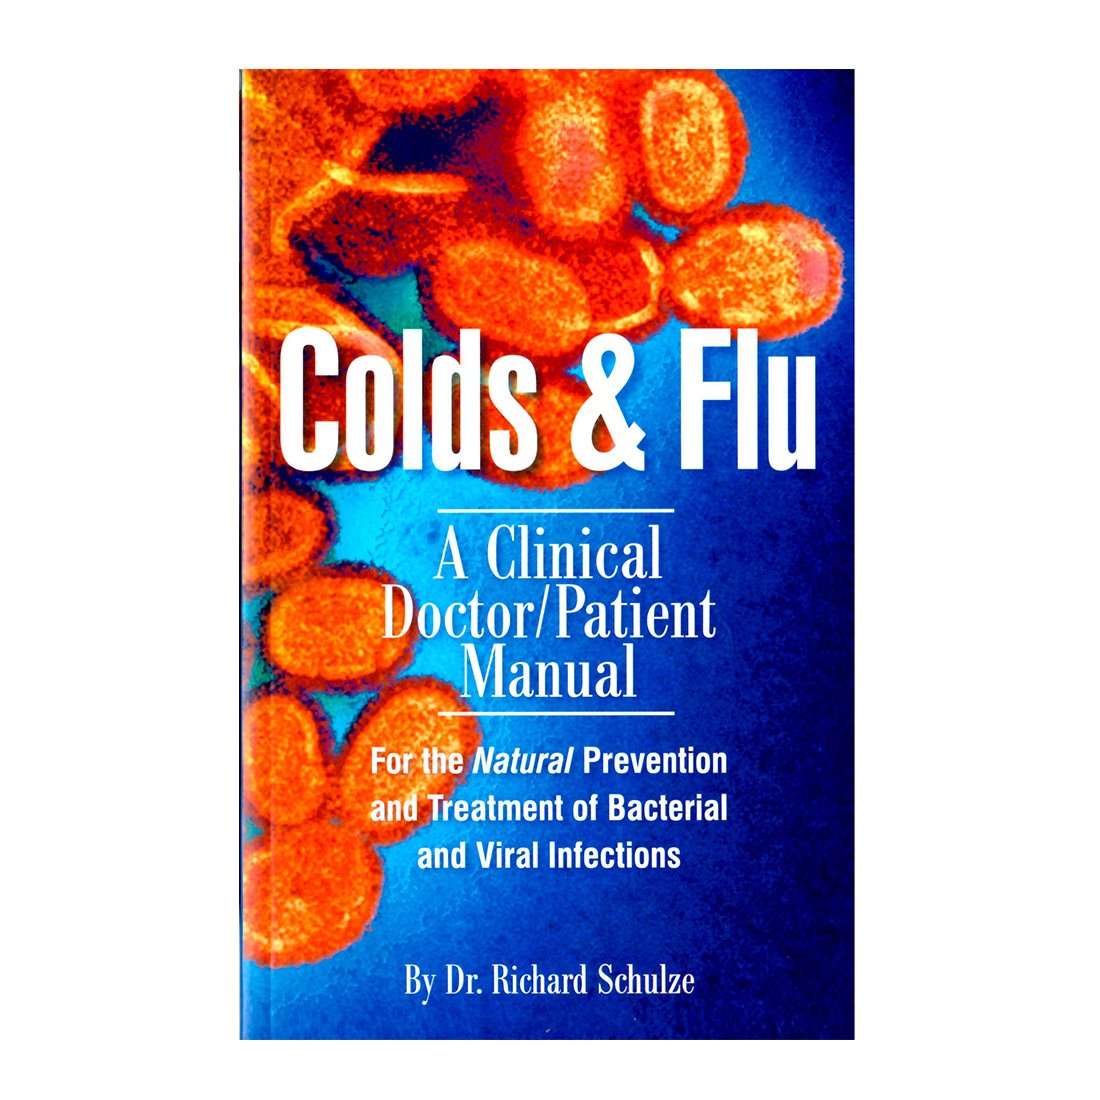 Colds & Flu